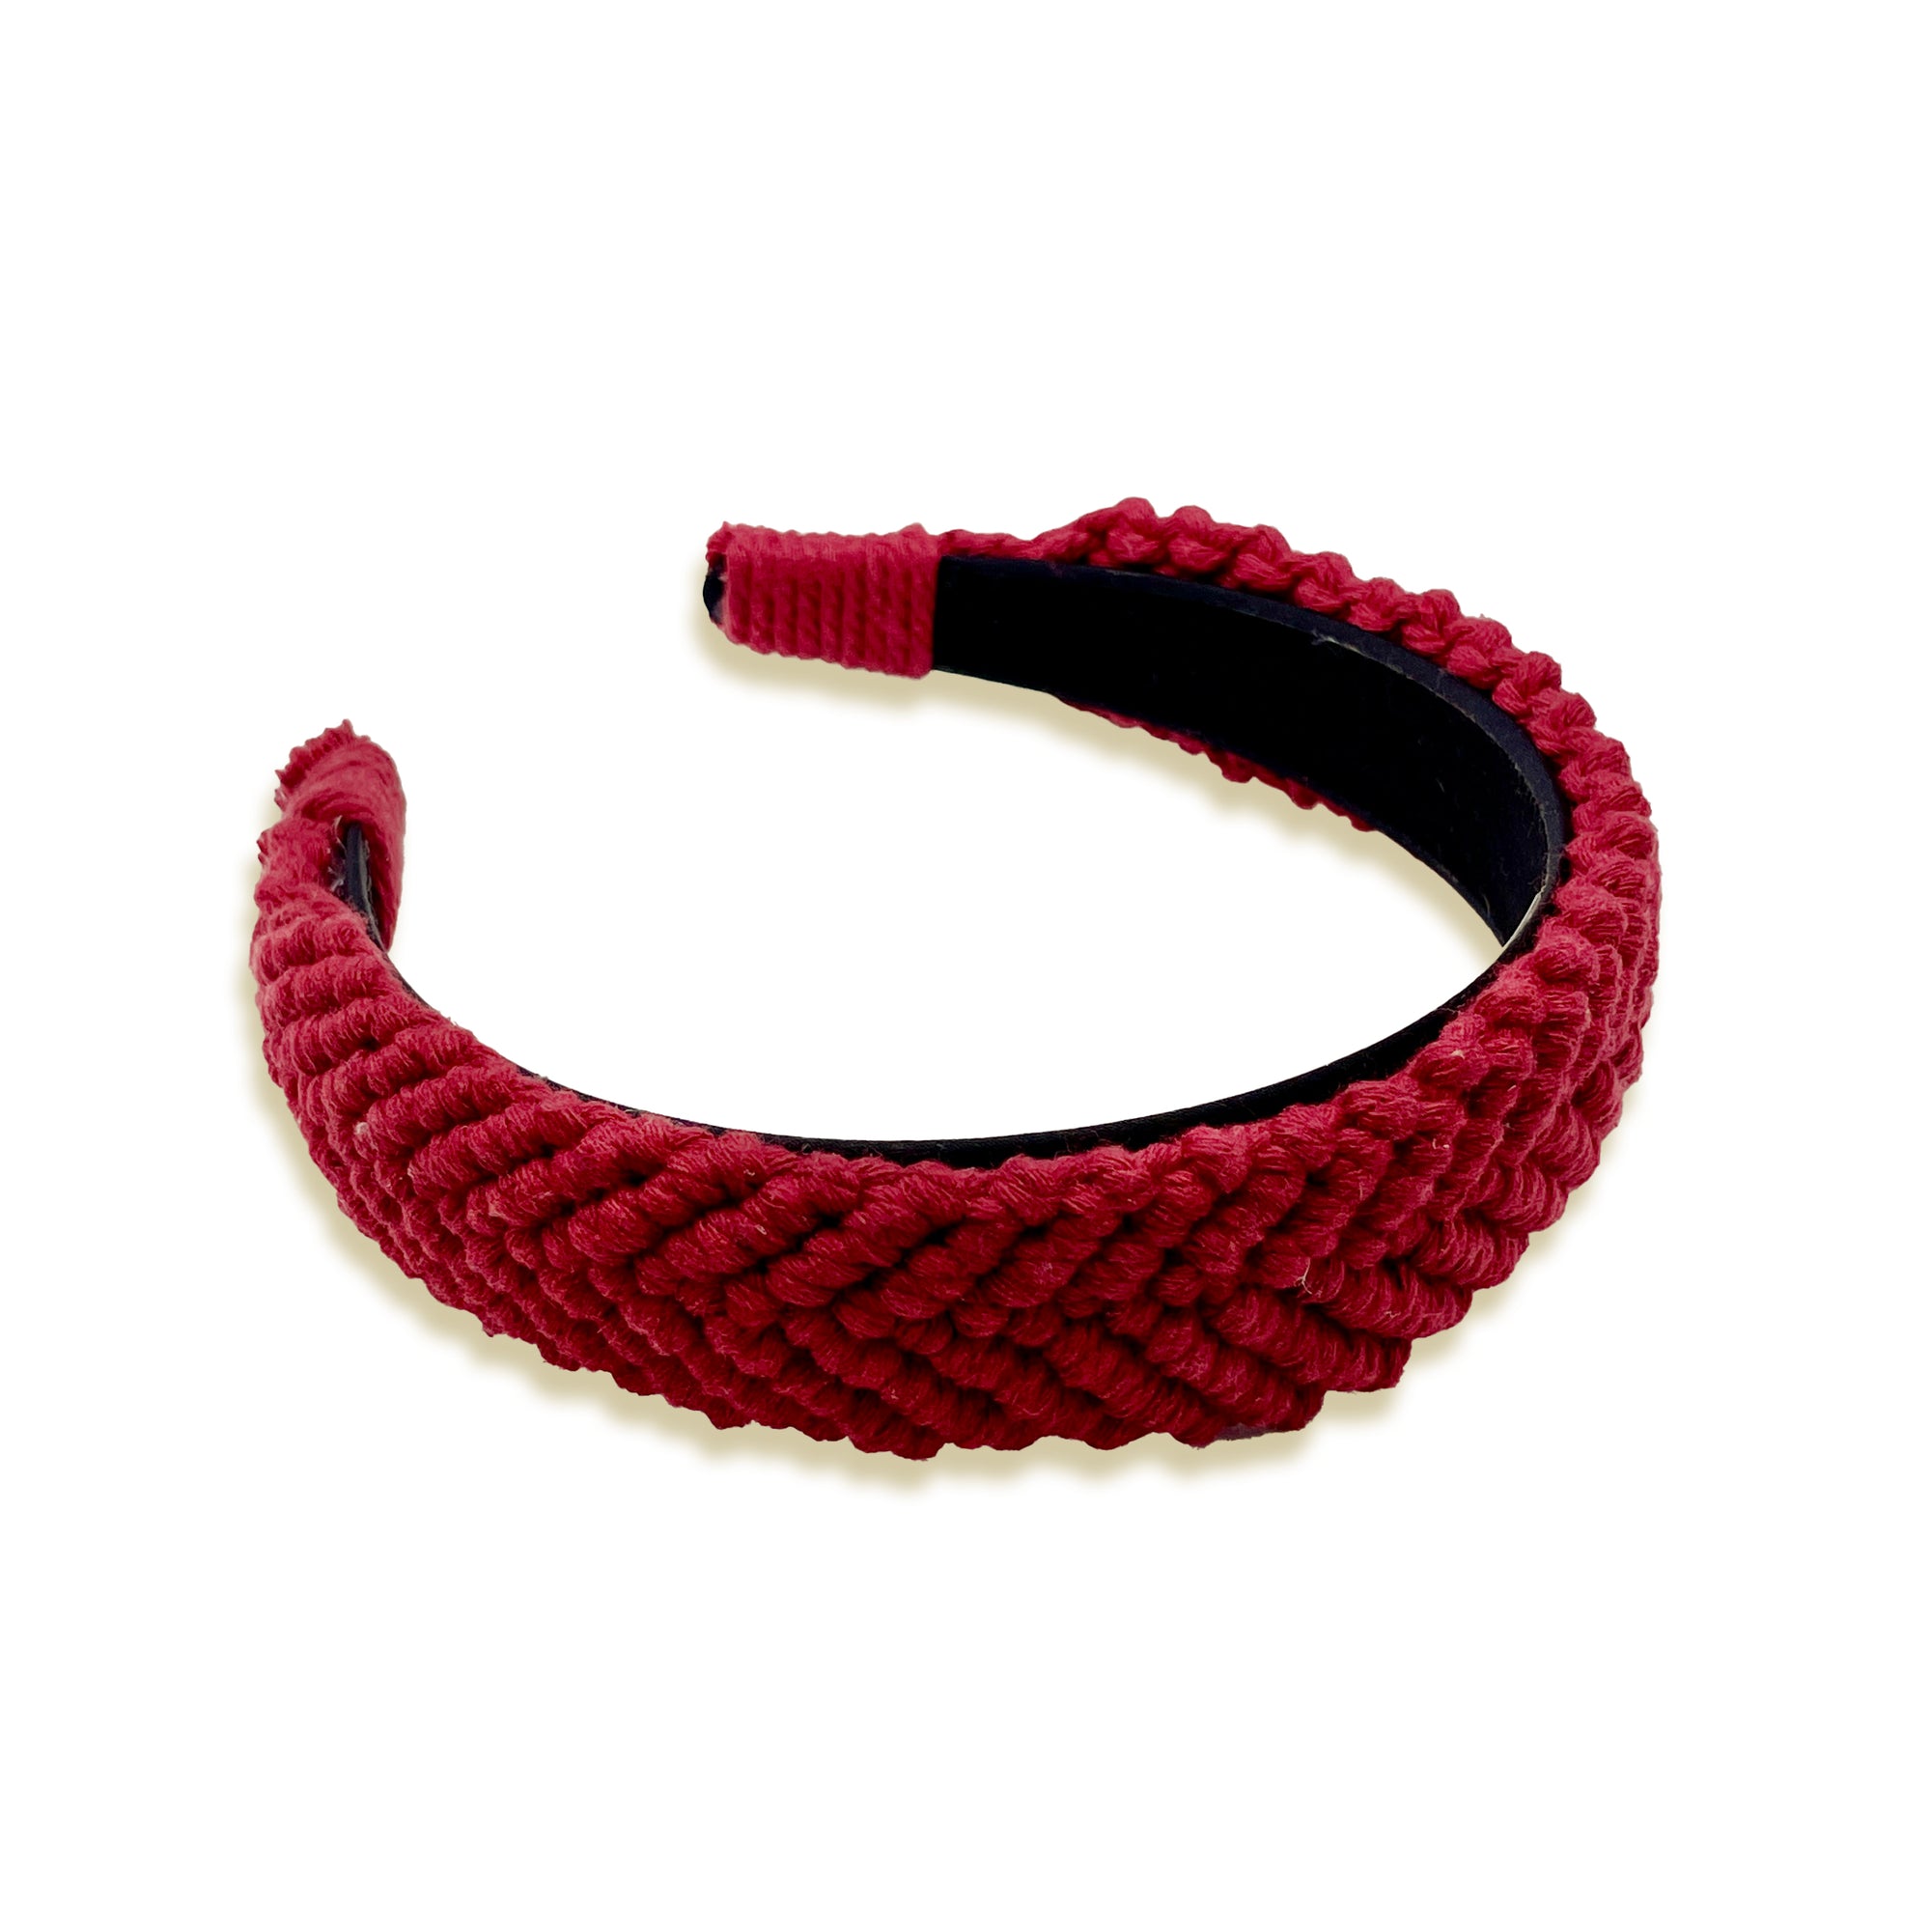 Vintage Style Cotton Rope Headband